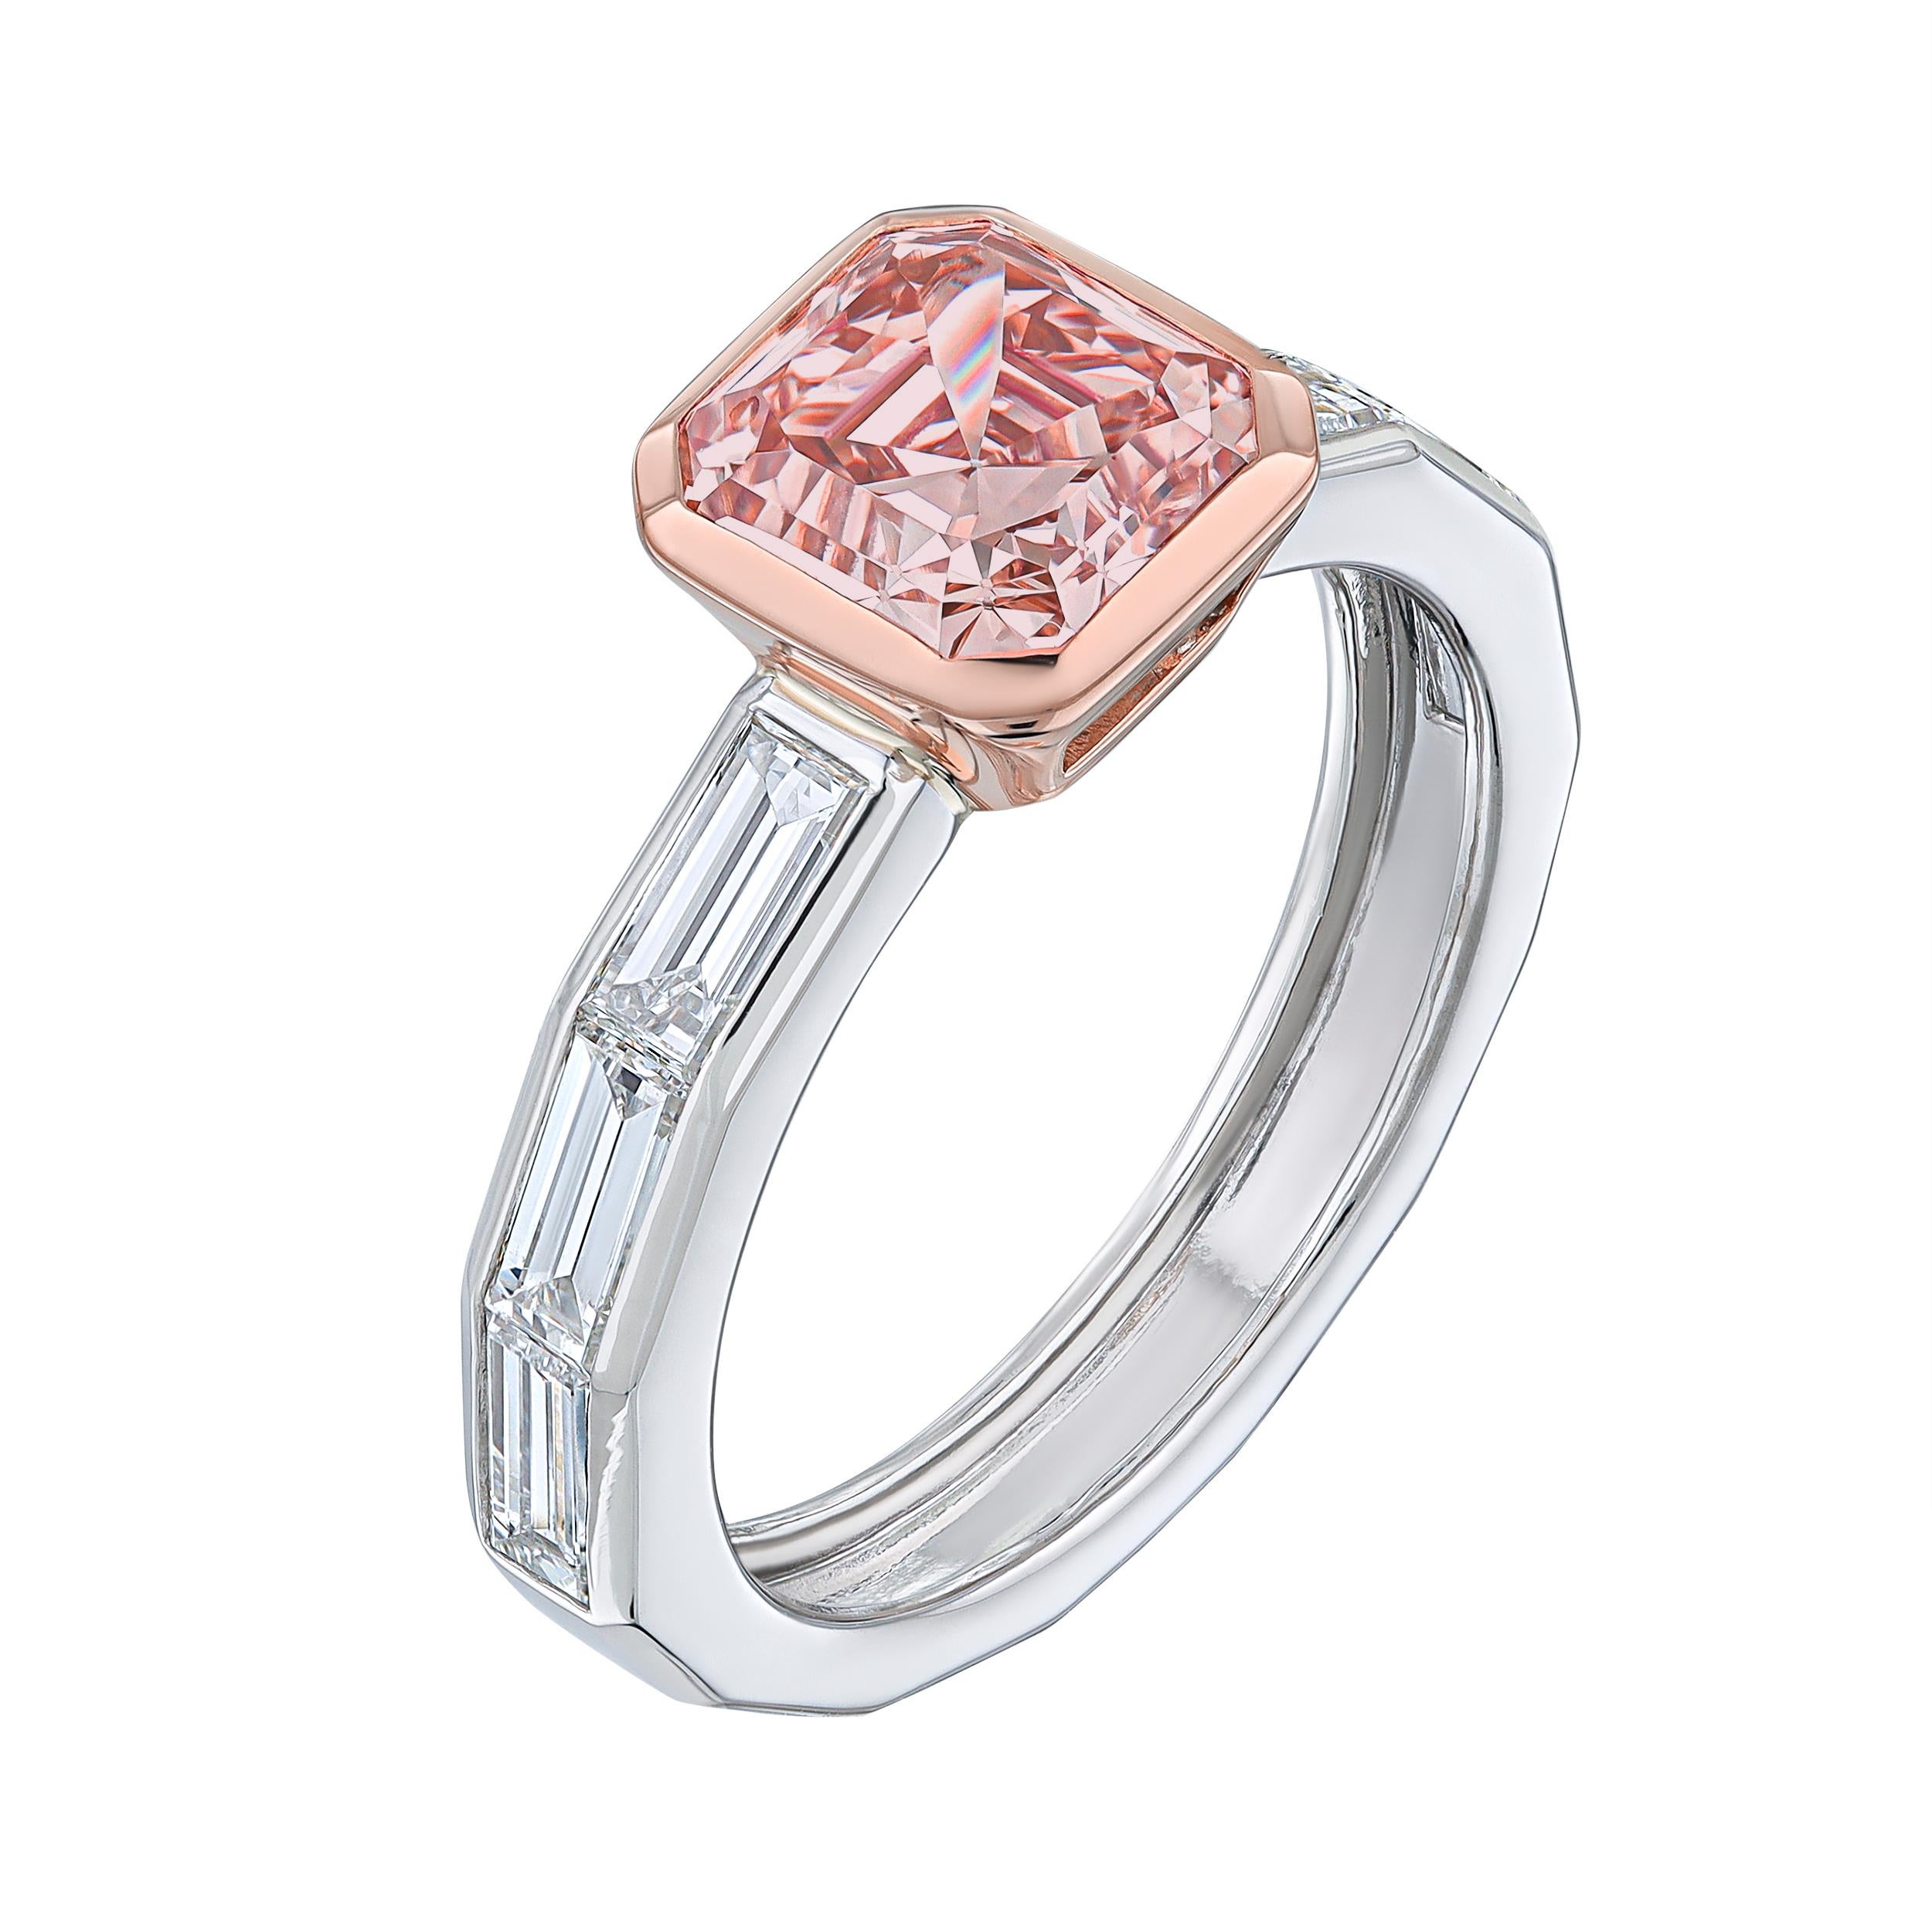 For Sale:  GIA Certified 1.57 Carat Fancy Pink-Brown Asscher Cut Diamond Engagement Ring 2